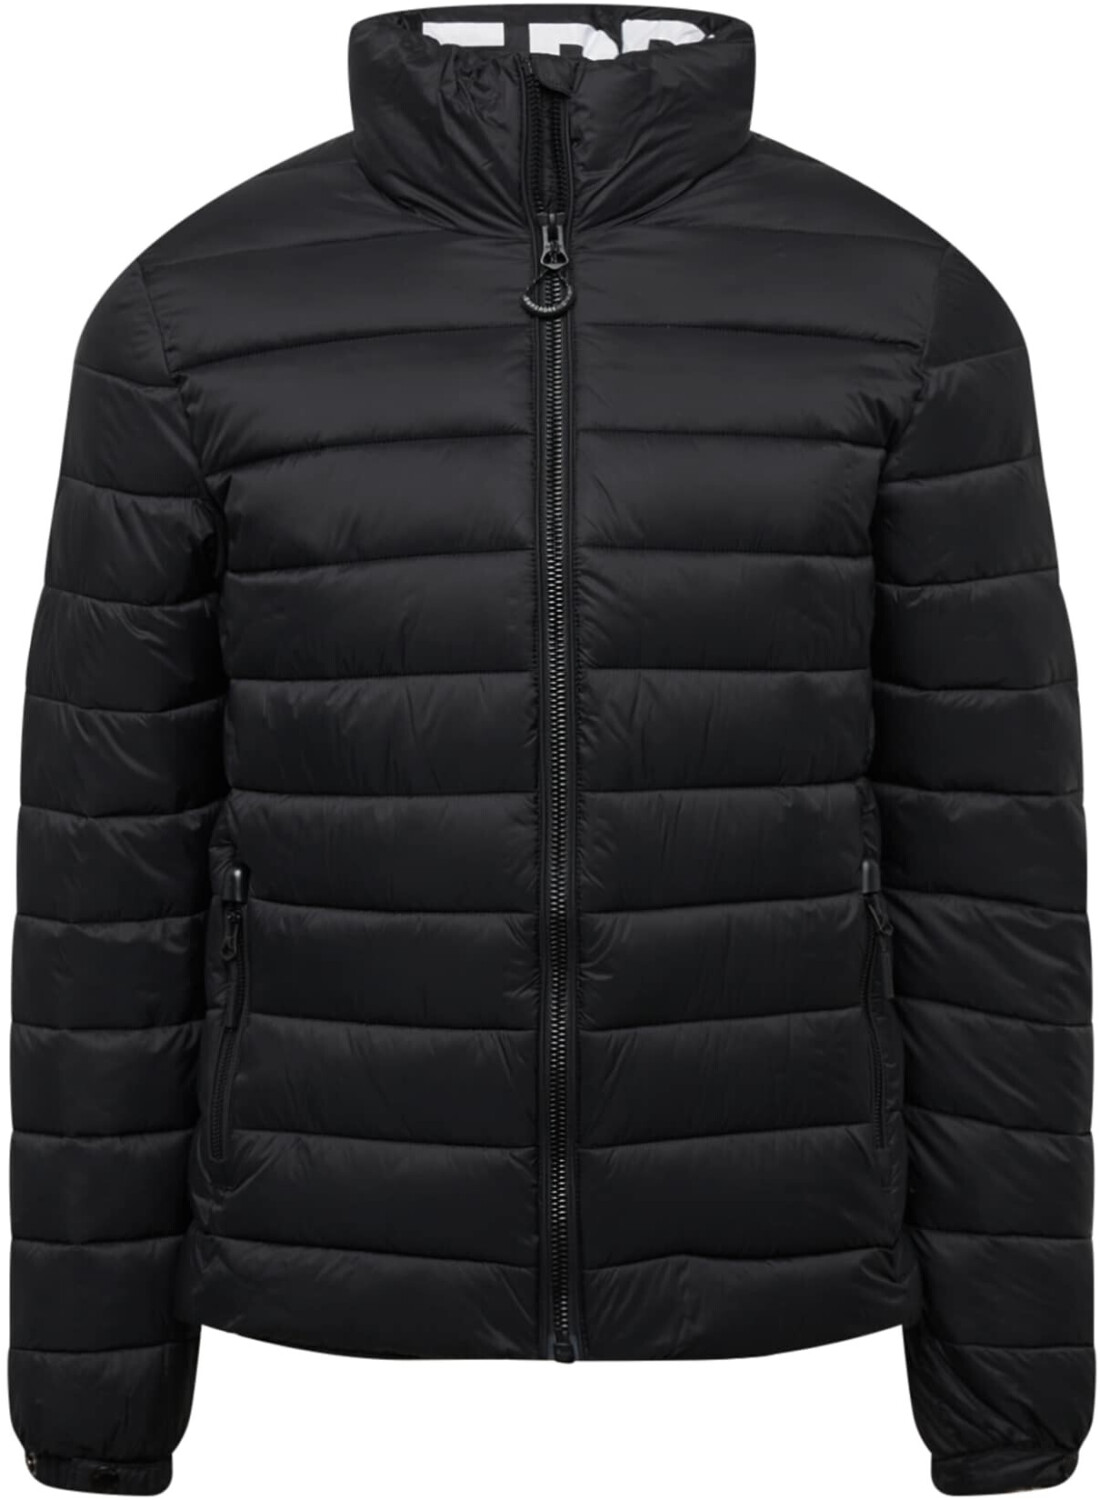 Preisvergleich € Mtn Fuji Non Superdry Hood Jacket ab black (M5011517A-O2A) bei 50,58 Code |